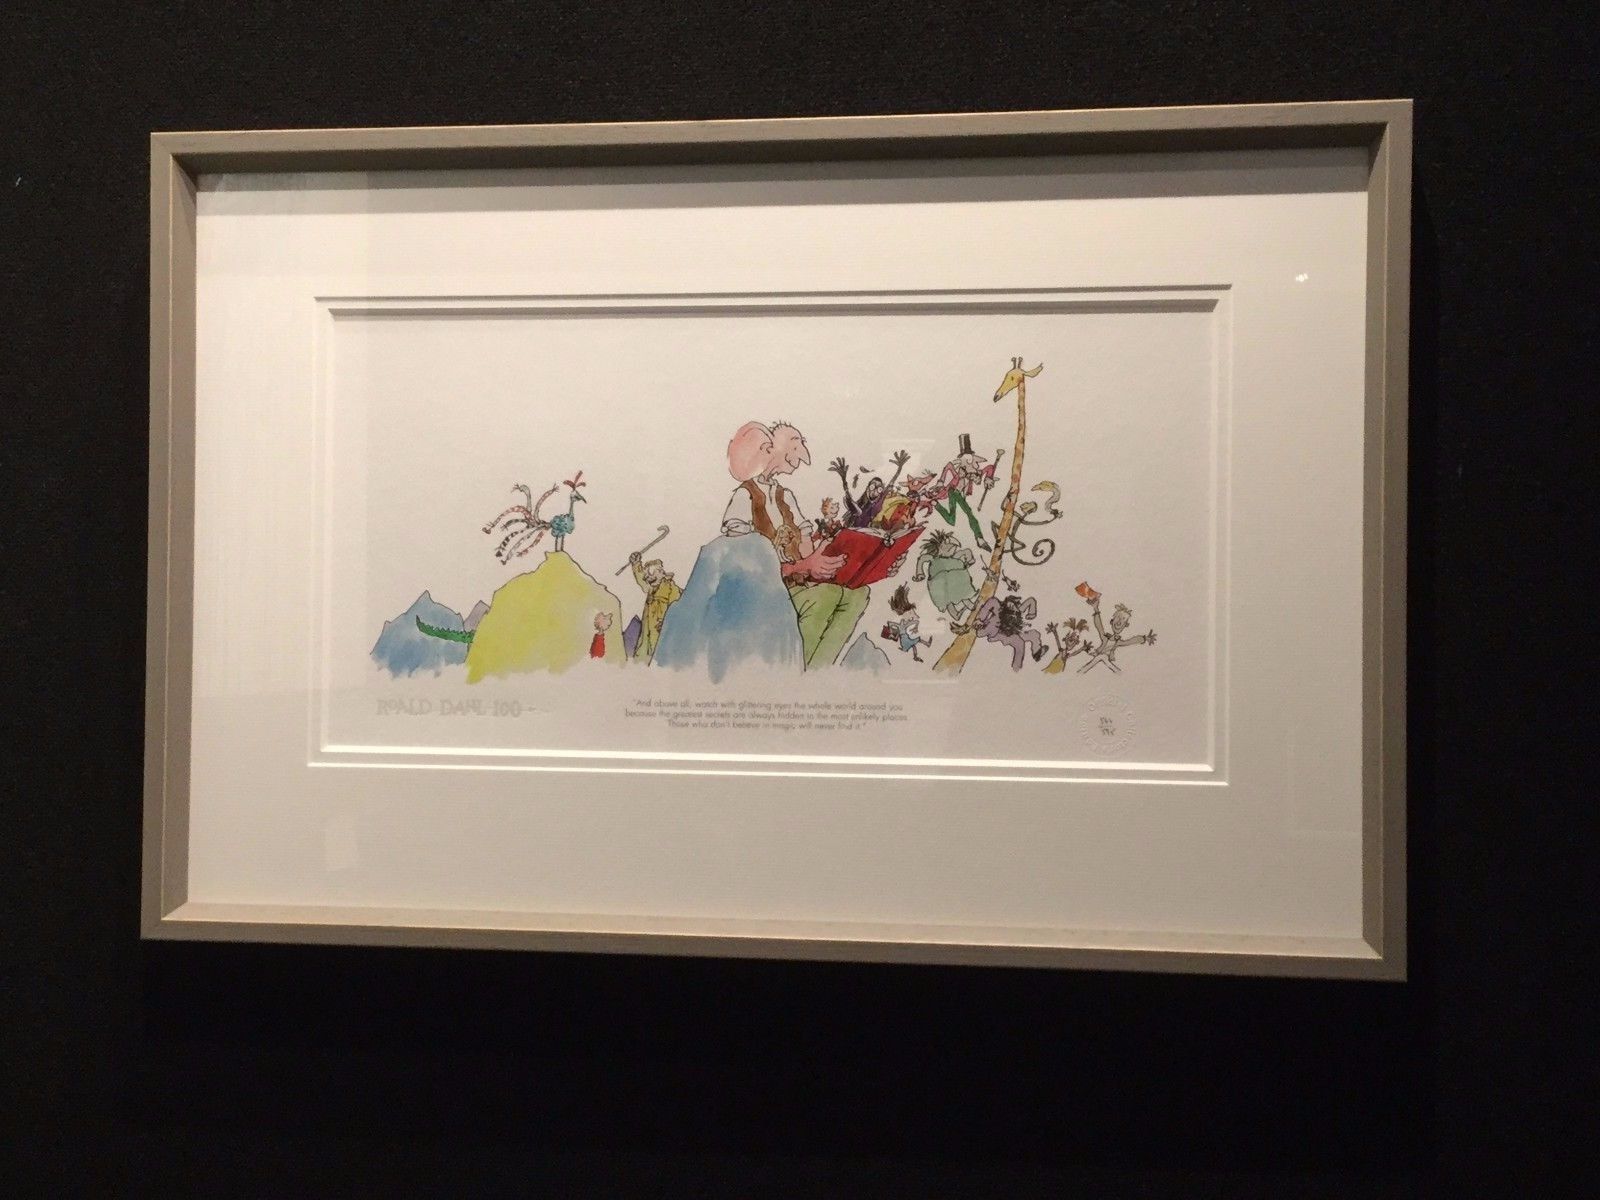 Roald Dahl 100th Anniversary Print by Quentin Blake